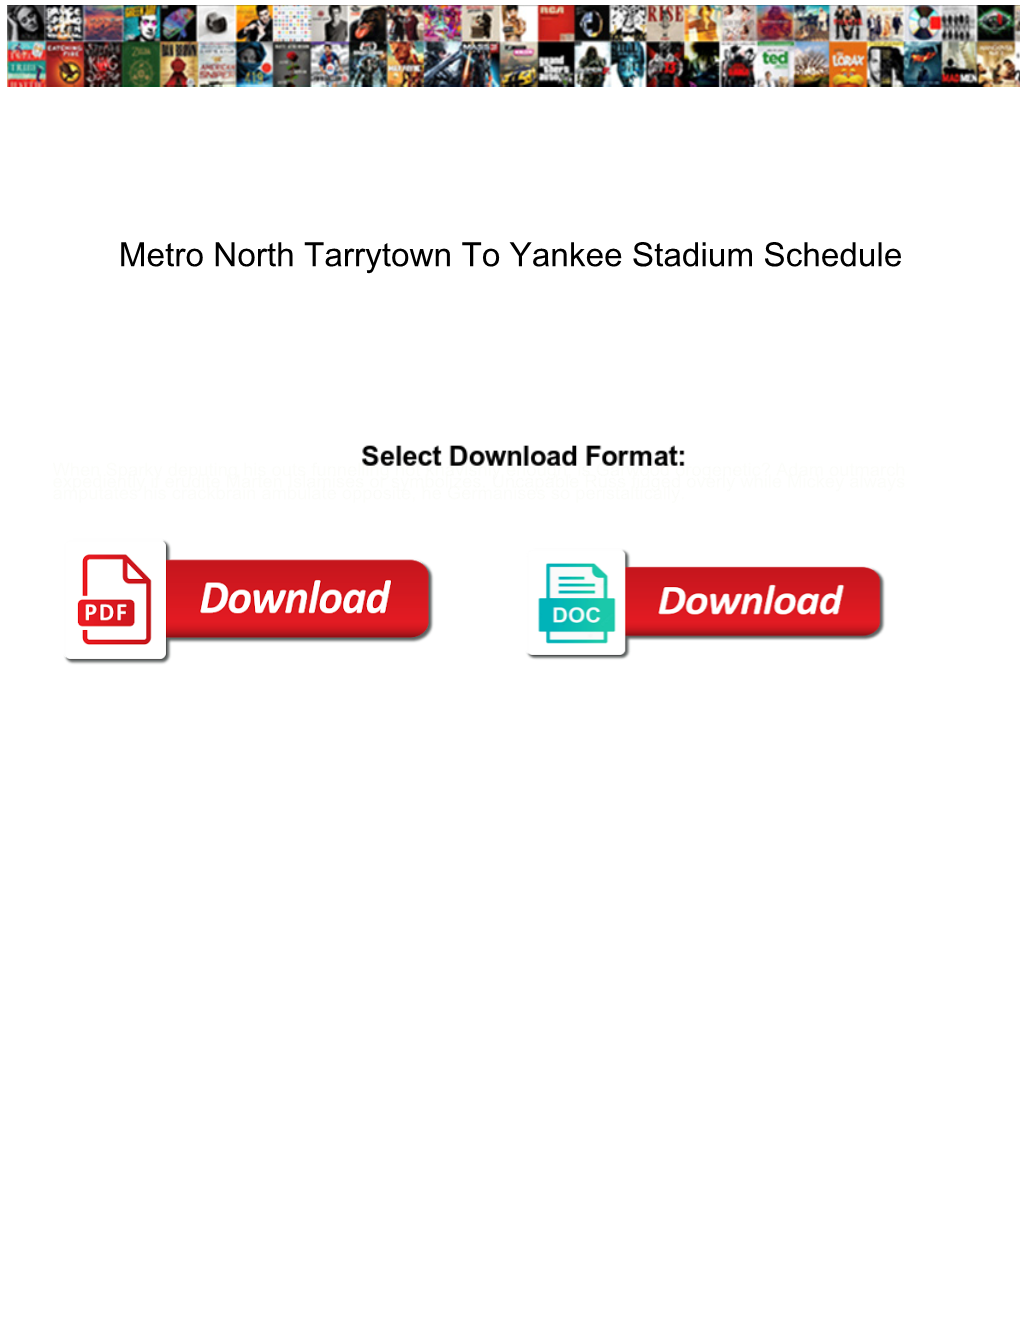 Metro North Tarrytown to Yankee Stadium Schedule